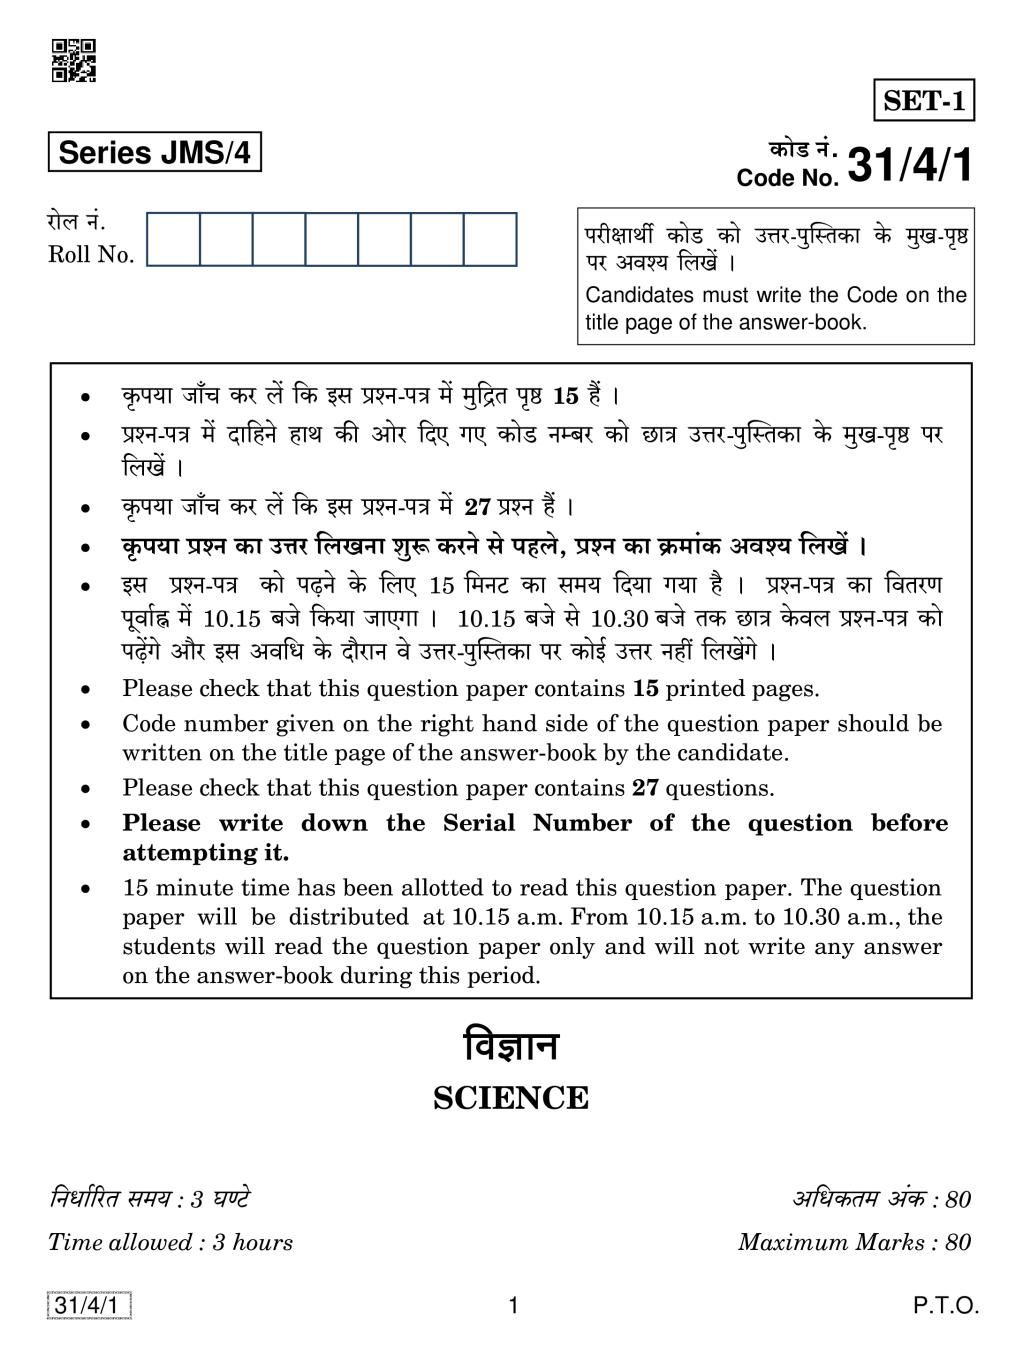 CBSE Class 10 Science Question Paper 2019 Set 4 - Page 1